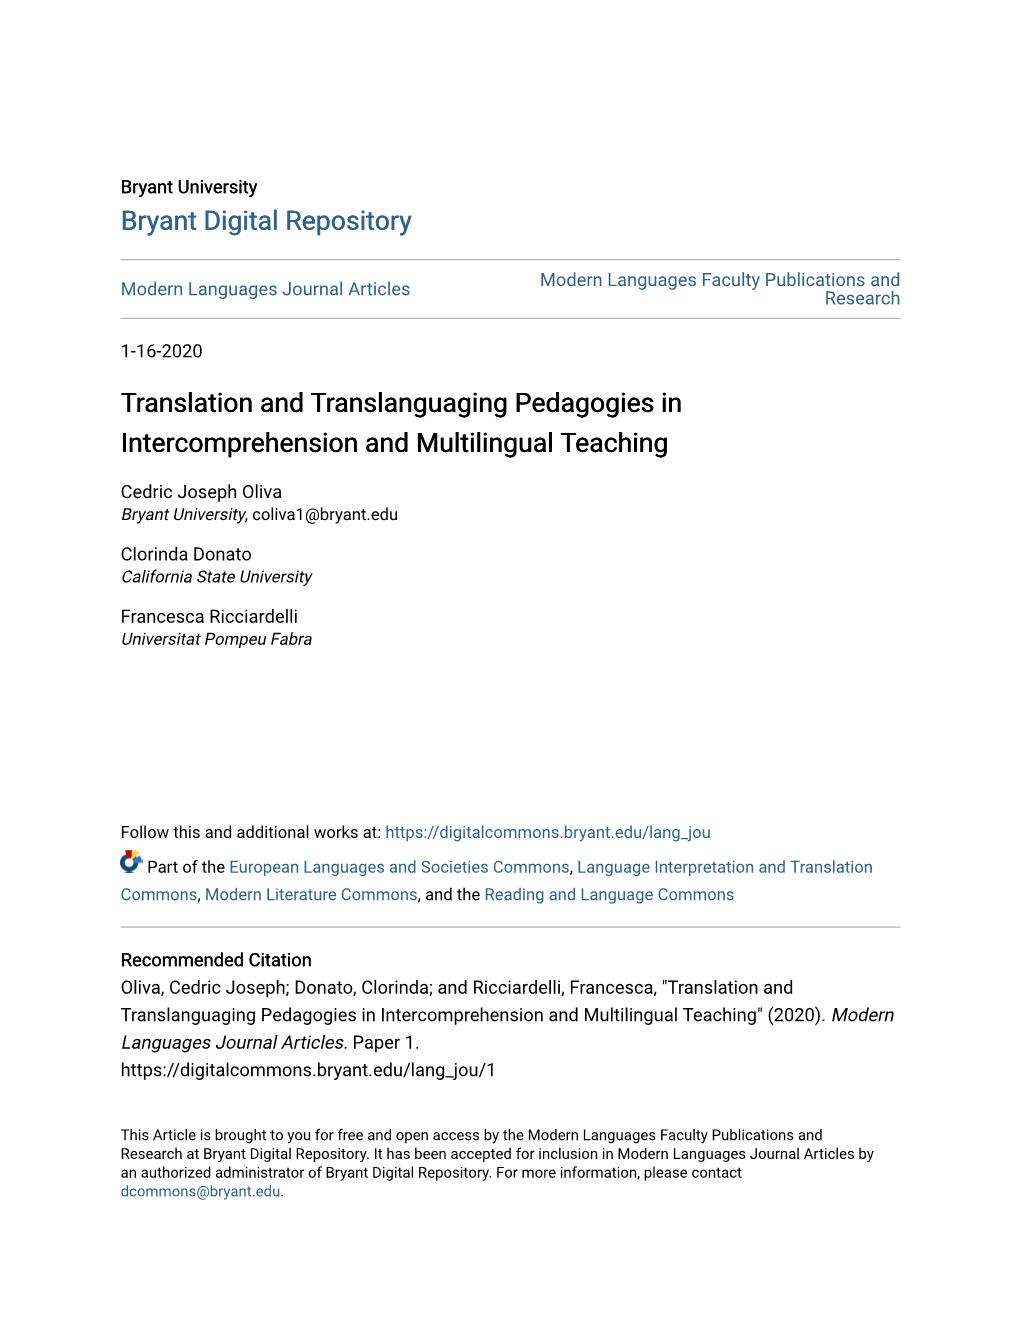 Translation and Translanguaging Pedagogies in Intercomprehension and Multilingual Teaching